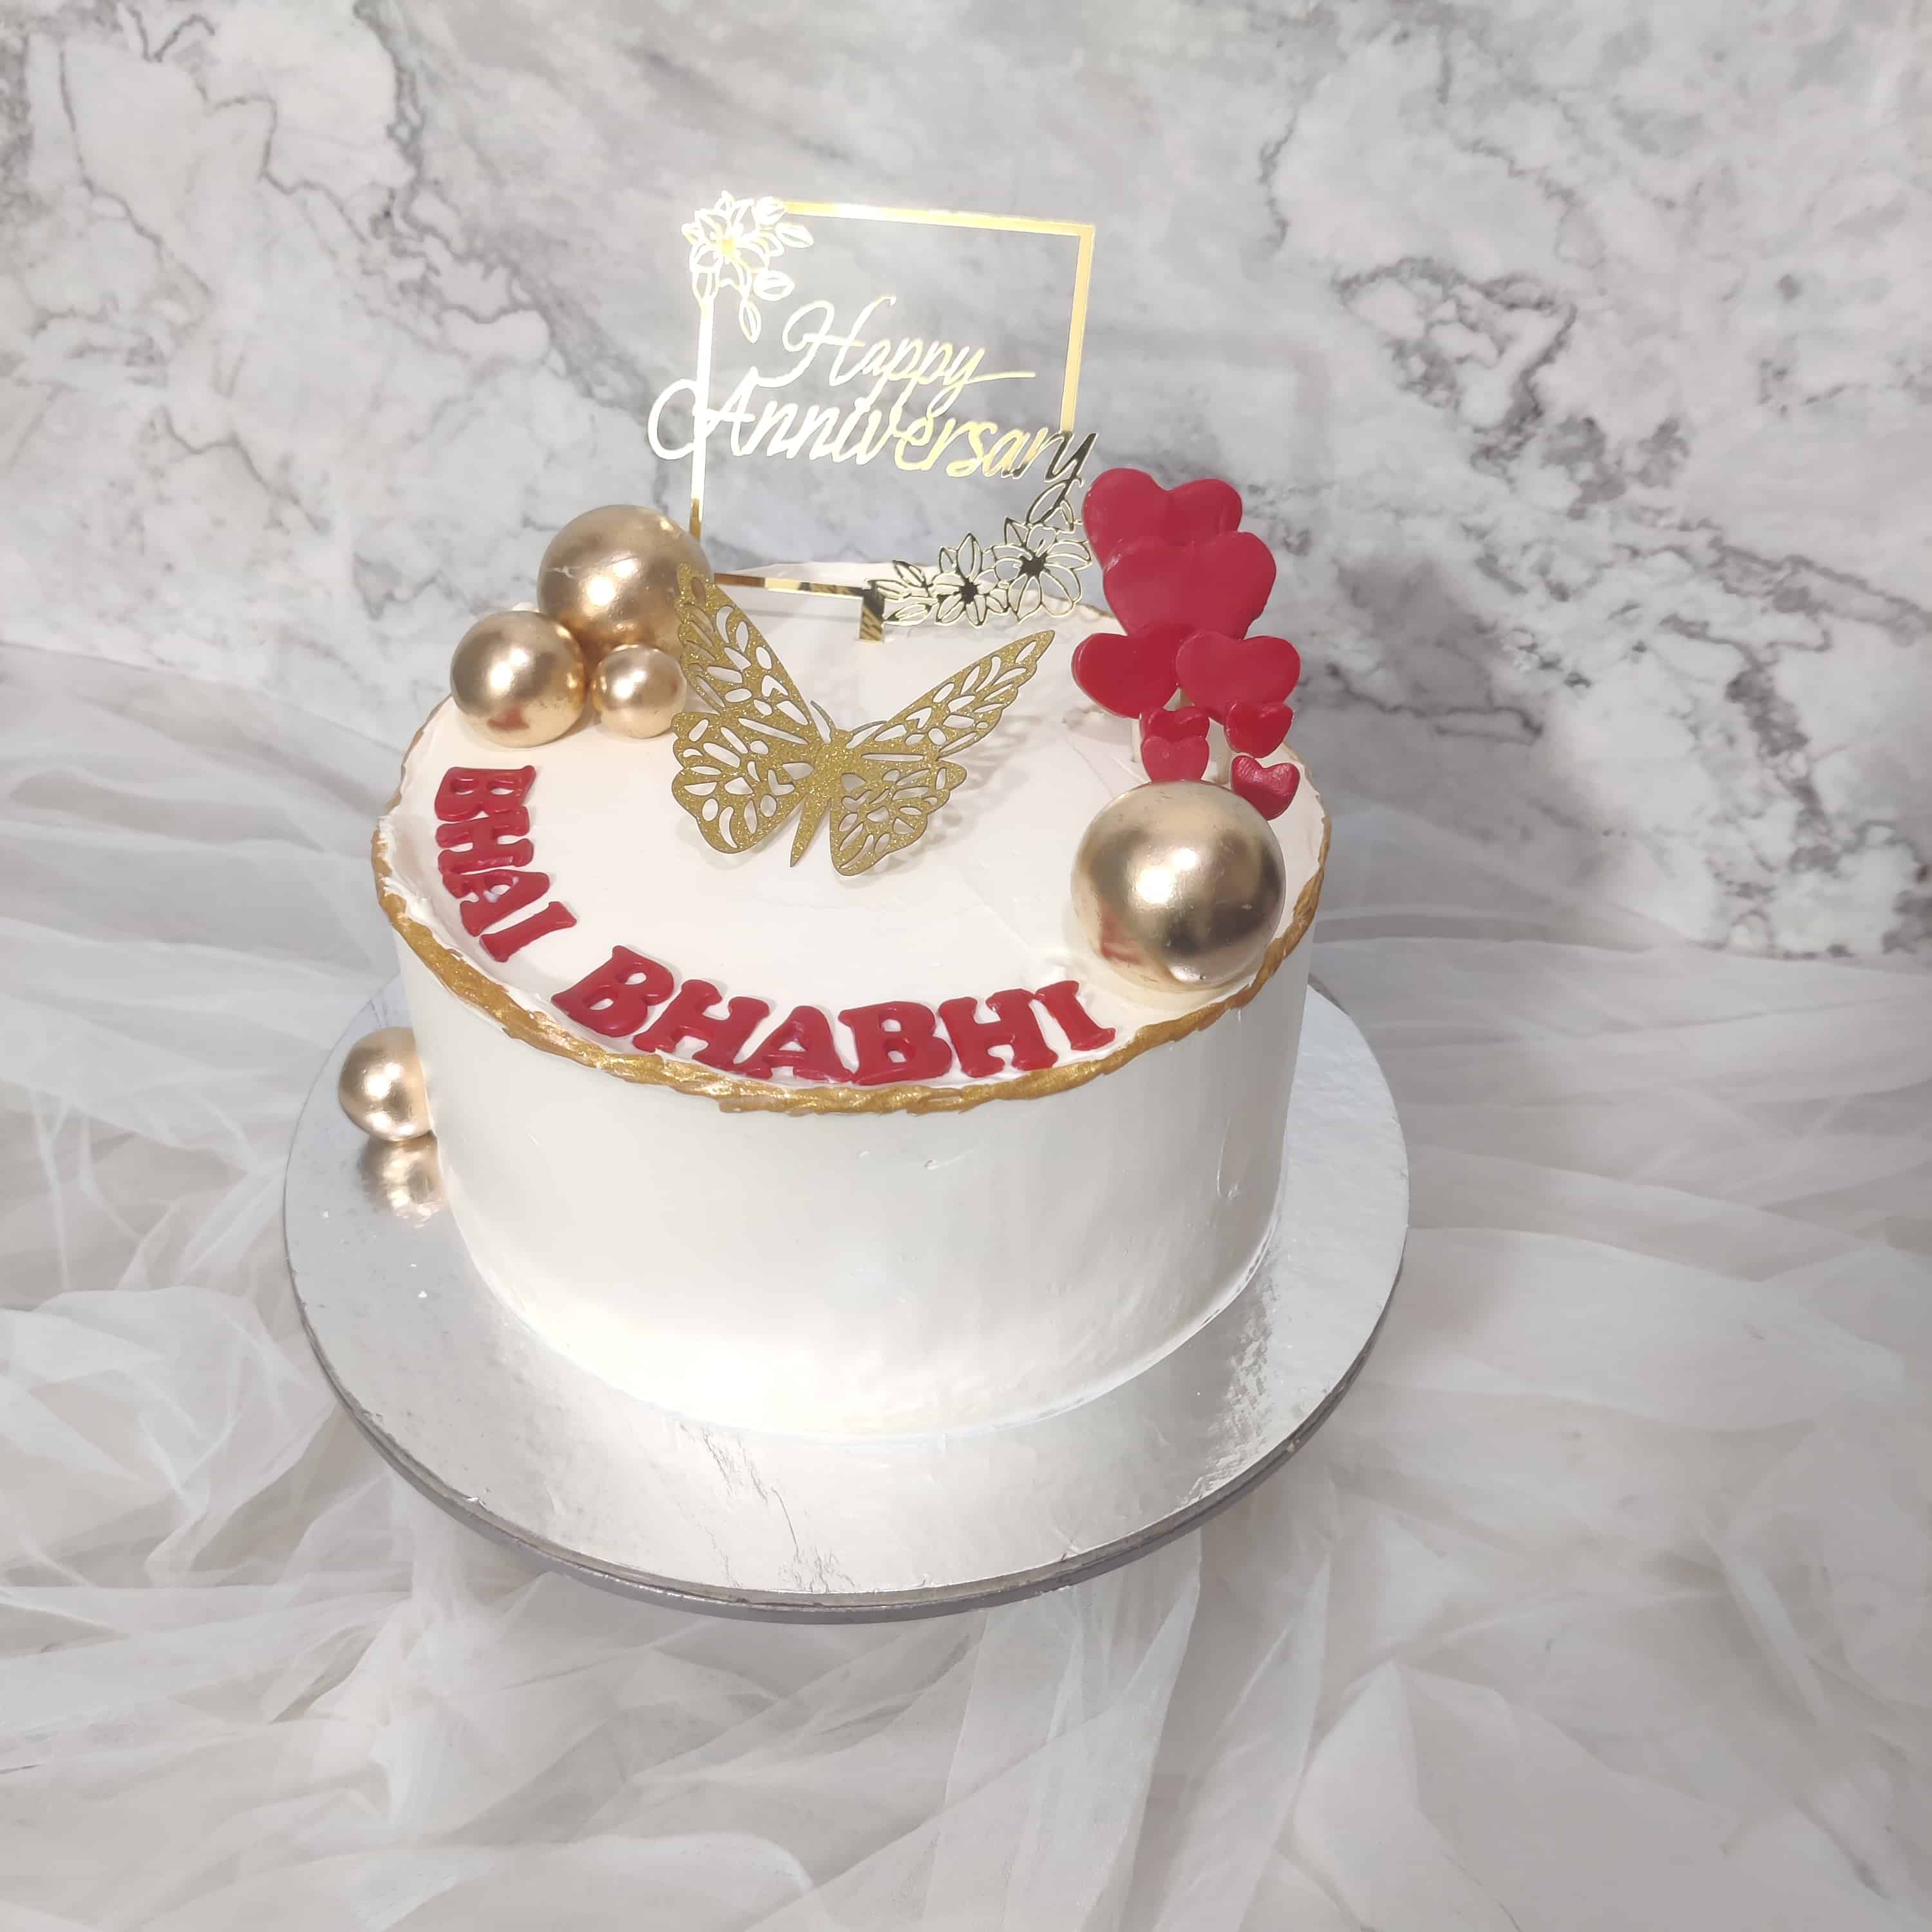 Happy Birthday my dear bhabhi Cake Images